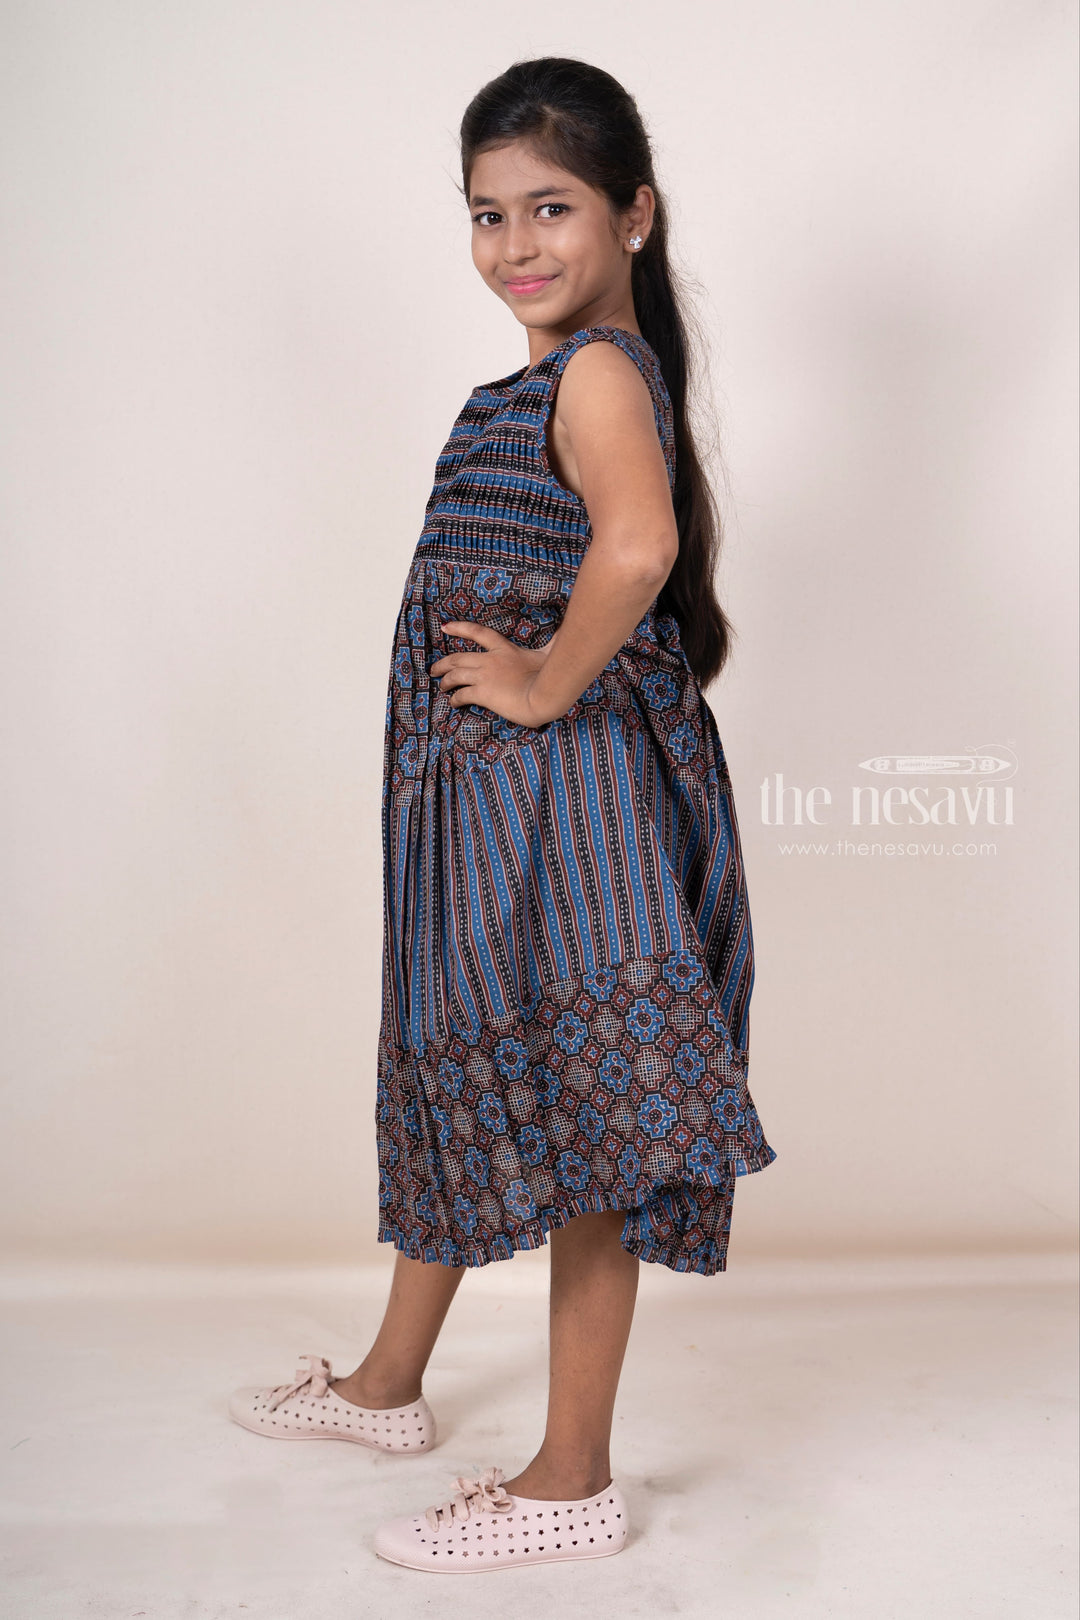 The Nesavu Frocks & Dresses Ikkat Designer Soft Cotton Navy Blue Cotton Gown For Girl Kids psr silks Nesavu